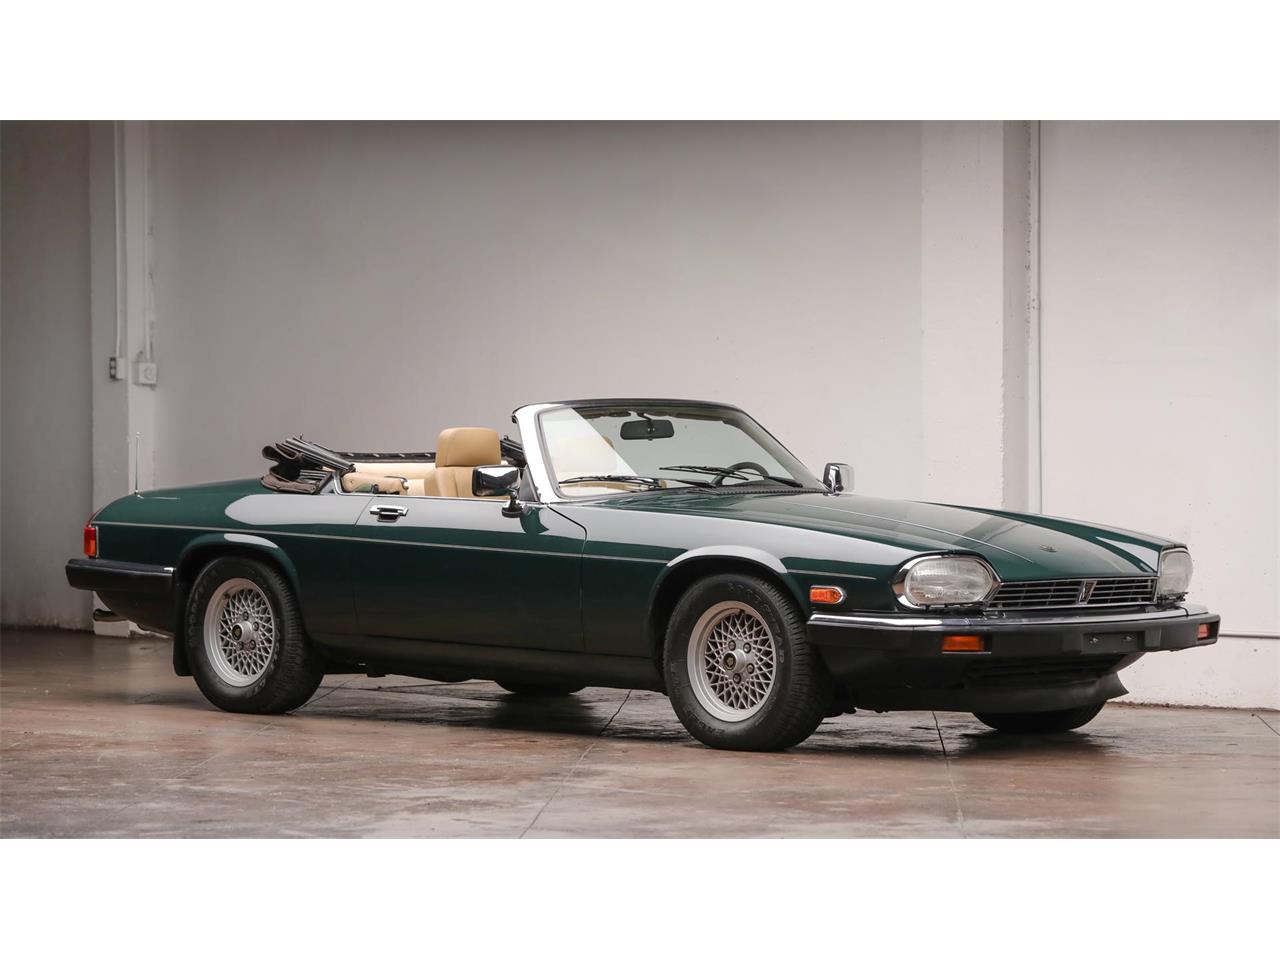 For Sale at Auction: 1990 Jaguar XJS for sale in Corpus Christi, TX